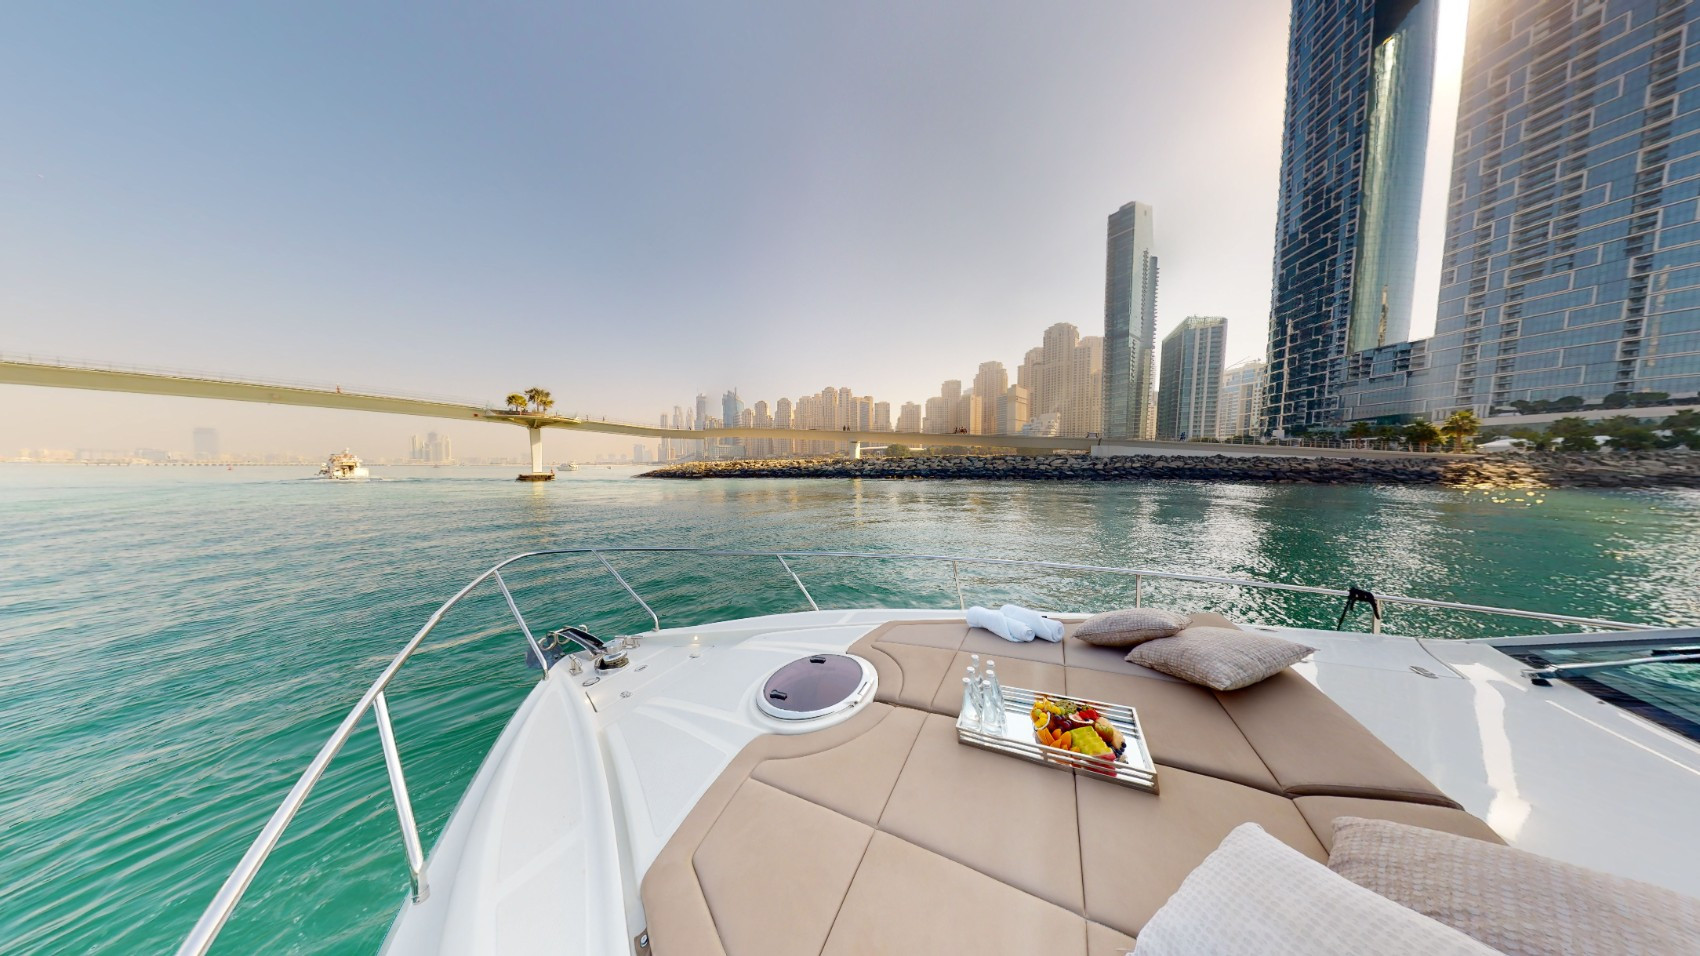 Pershing 5X Pearl White 52 Fuß in Dubai Harbour  zur Miete in Dubai